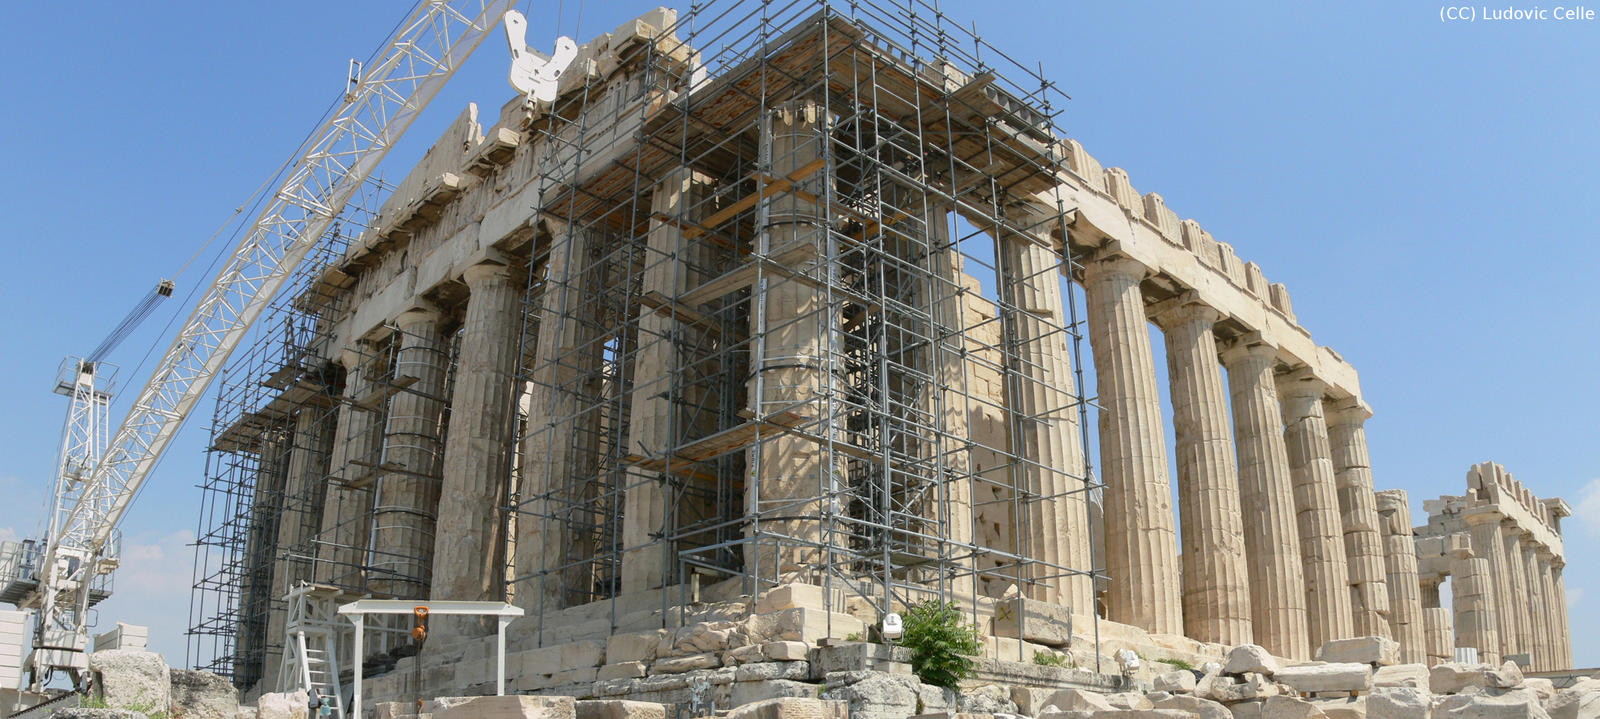 Greece - Rebuilding the Parthenon 02 (panorama)